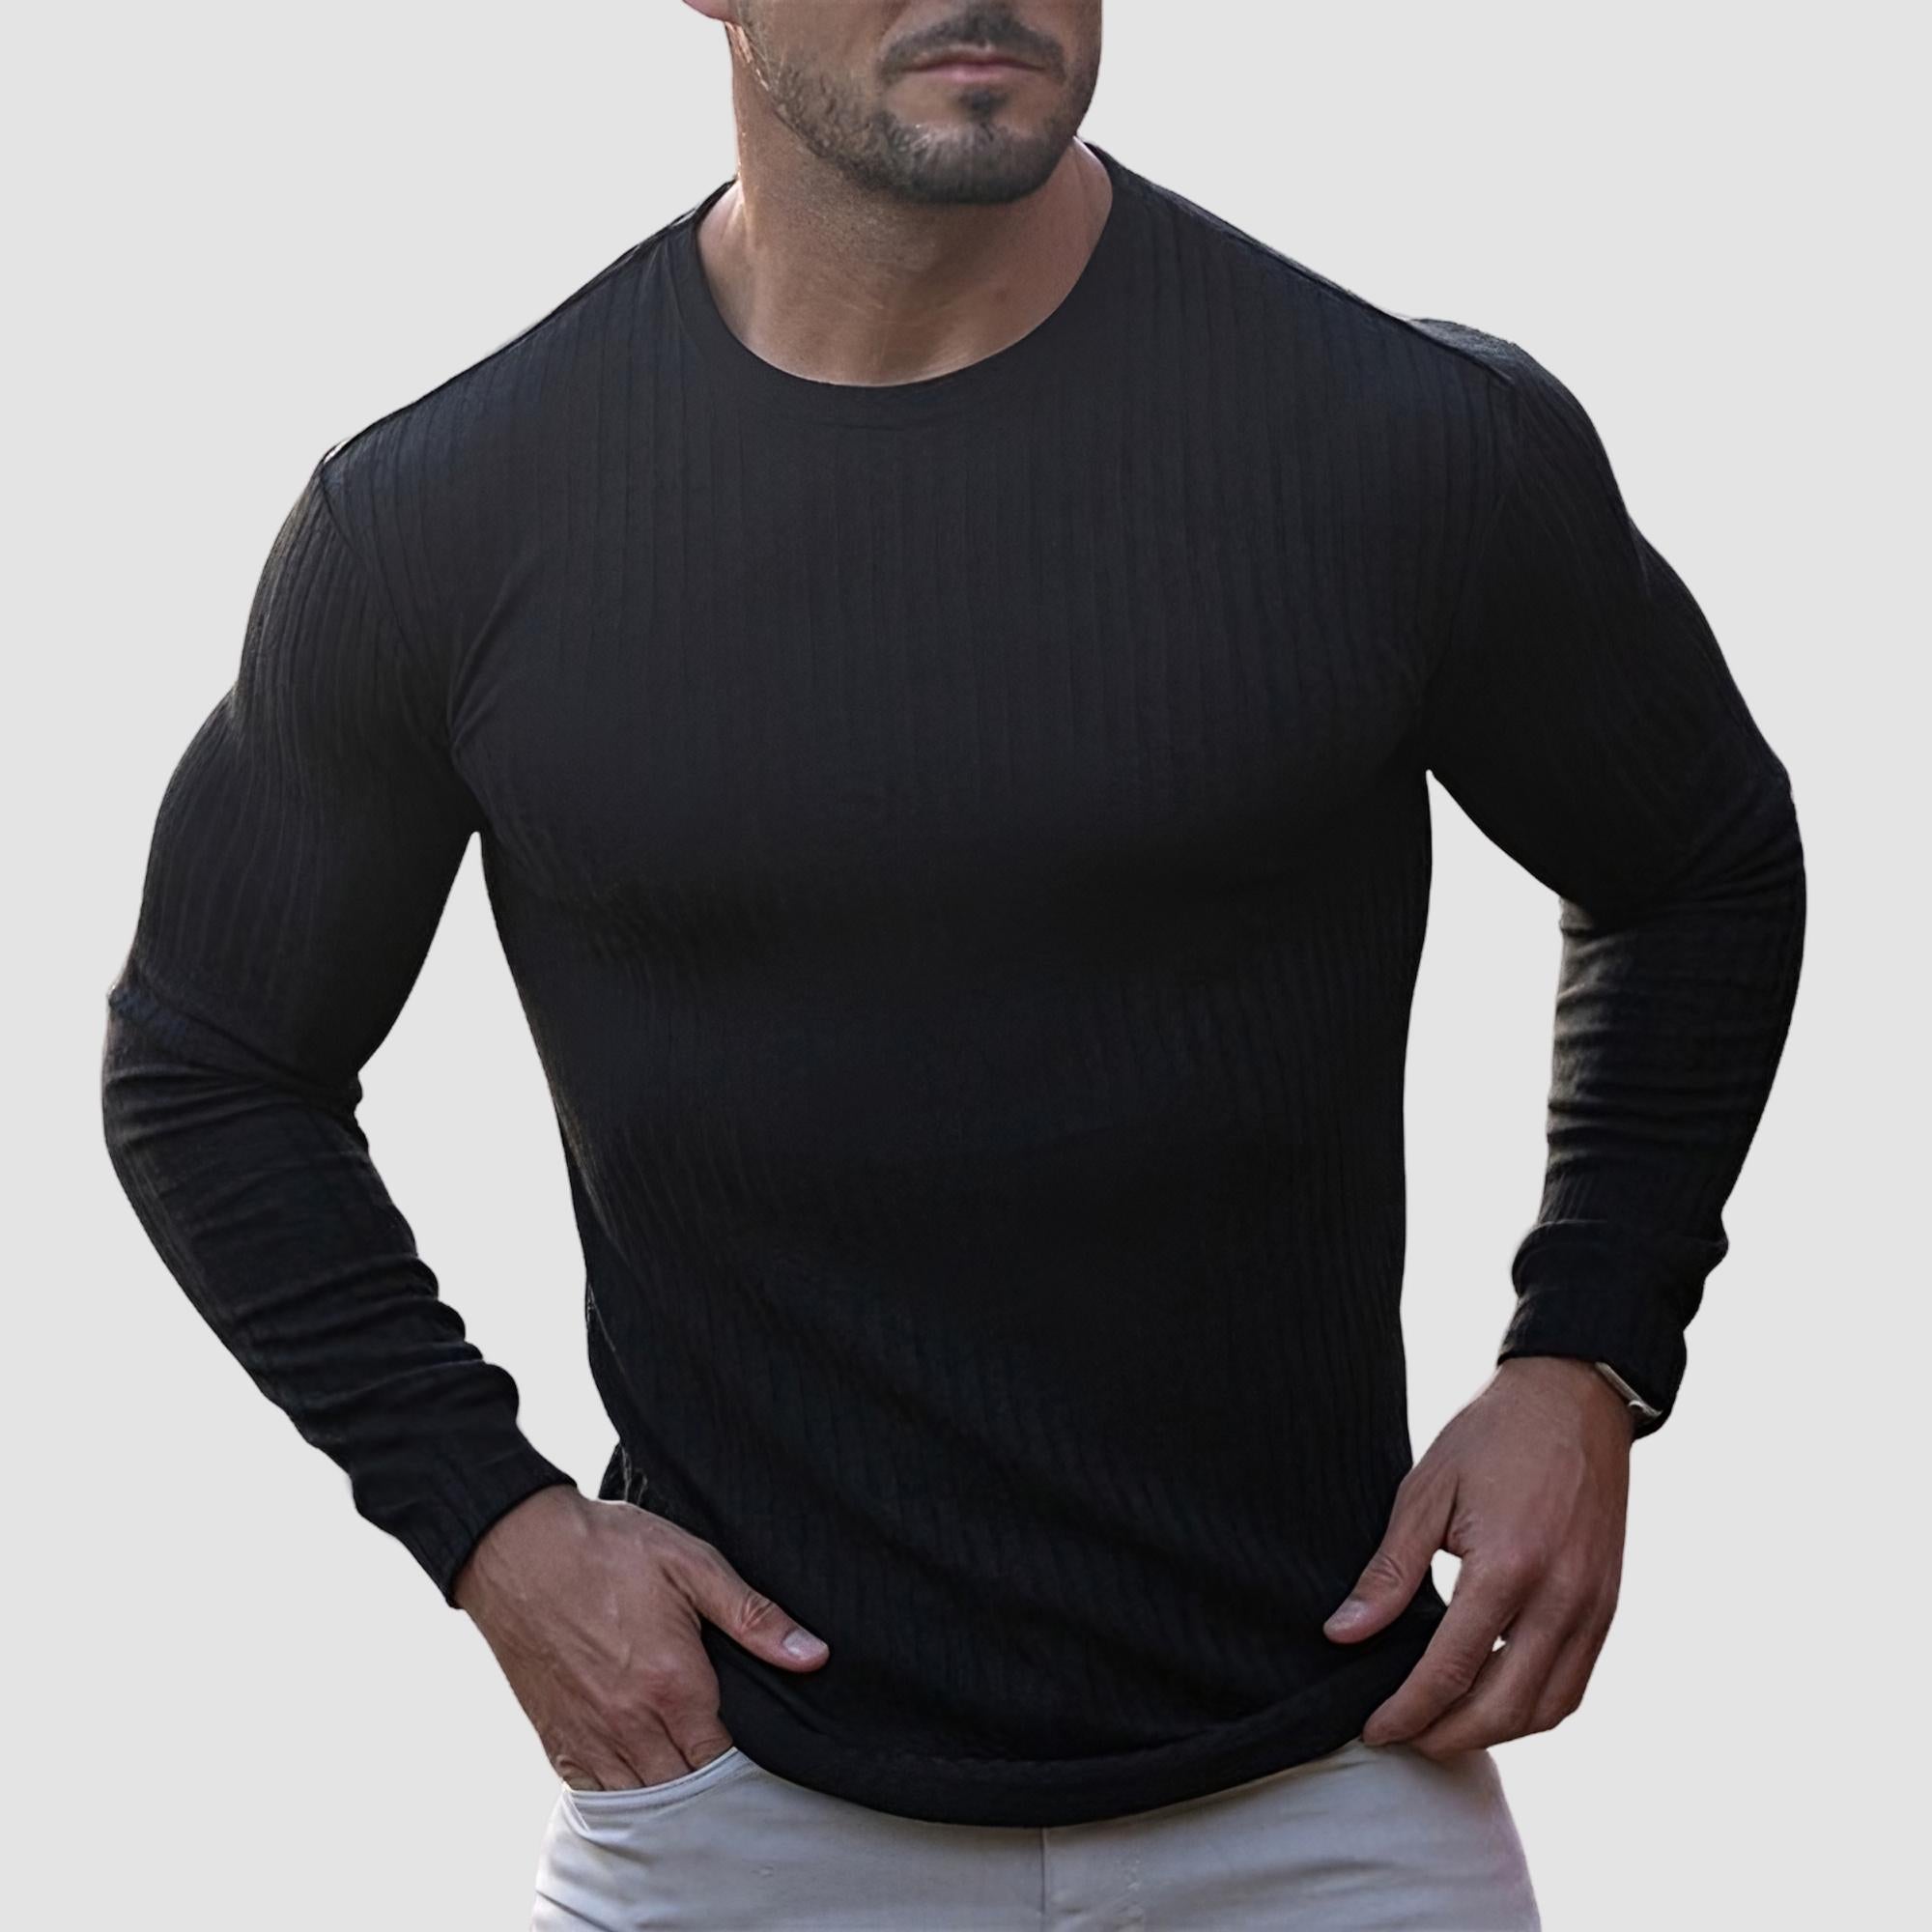 Men's Sports Fitness Striped Long Sleeve T-shirt